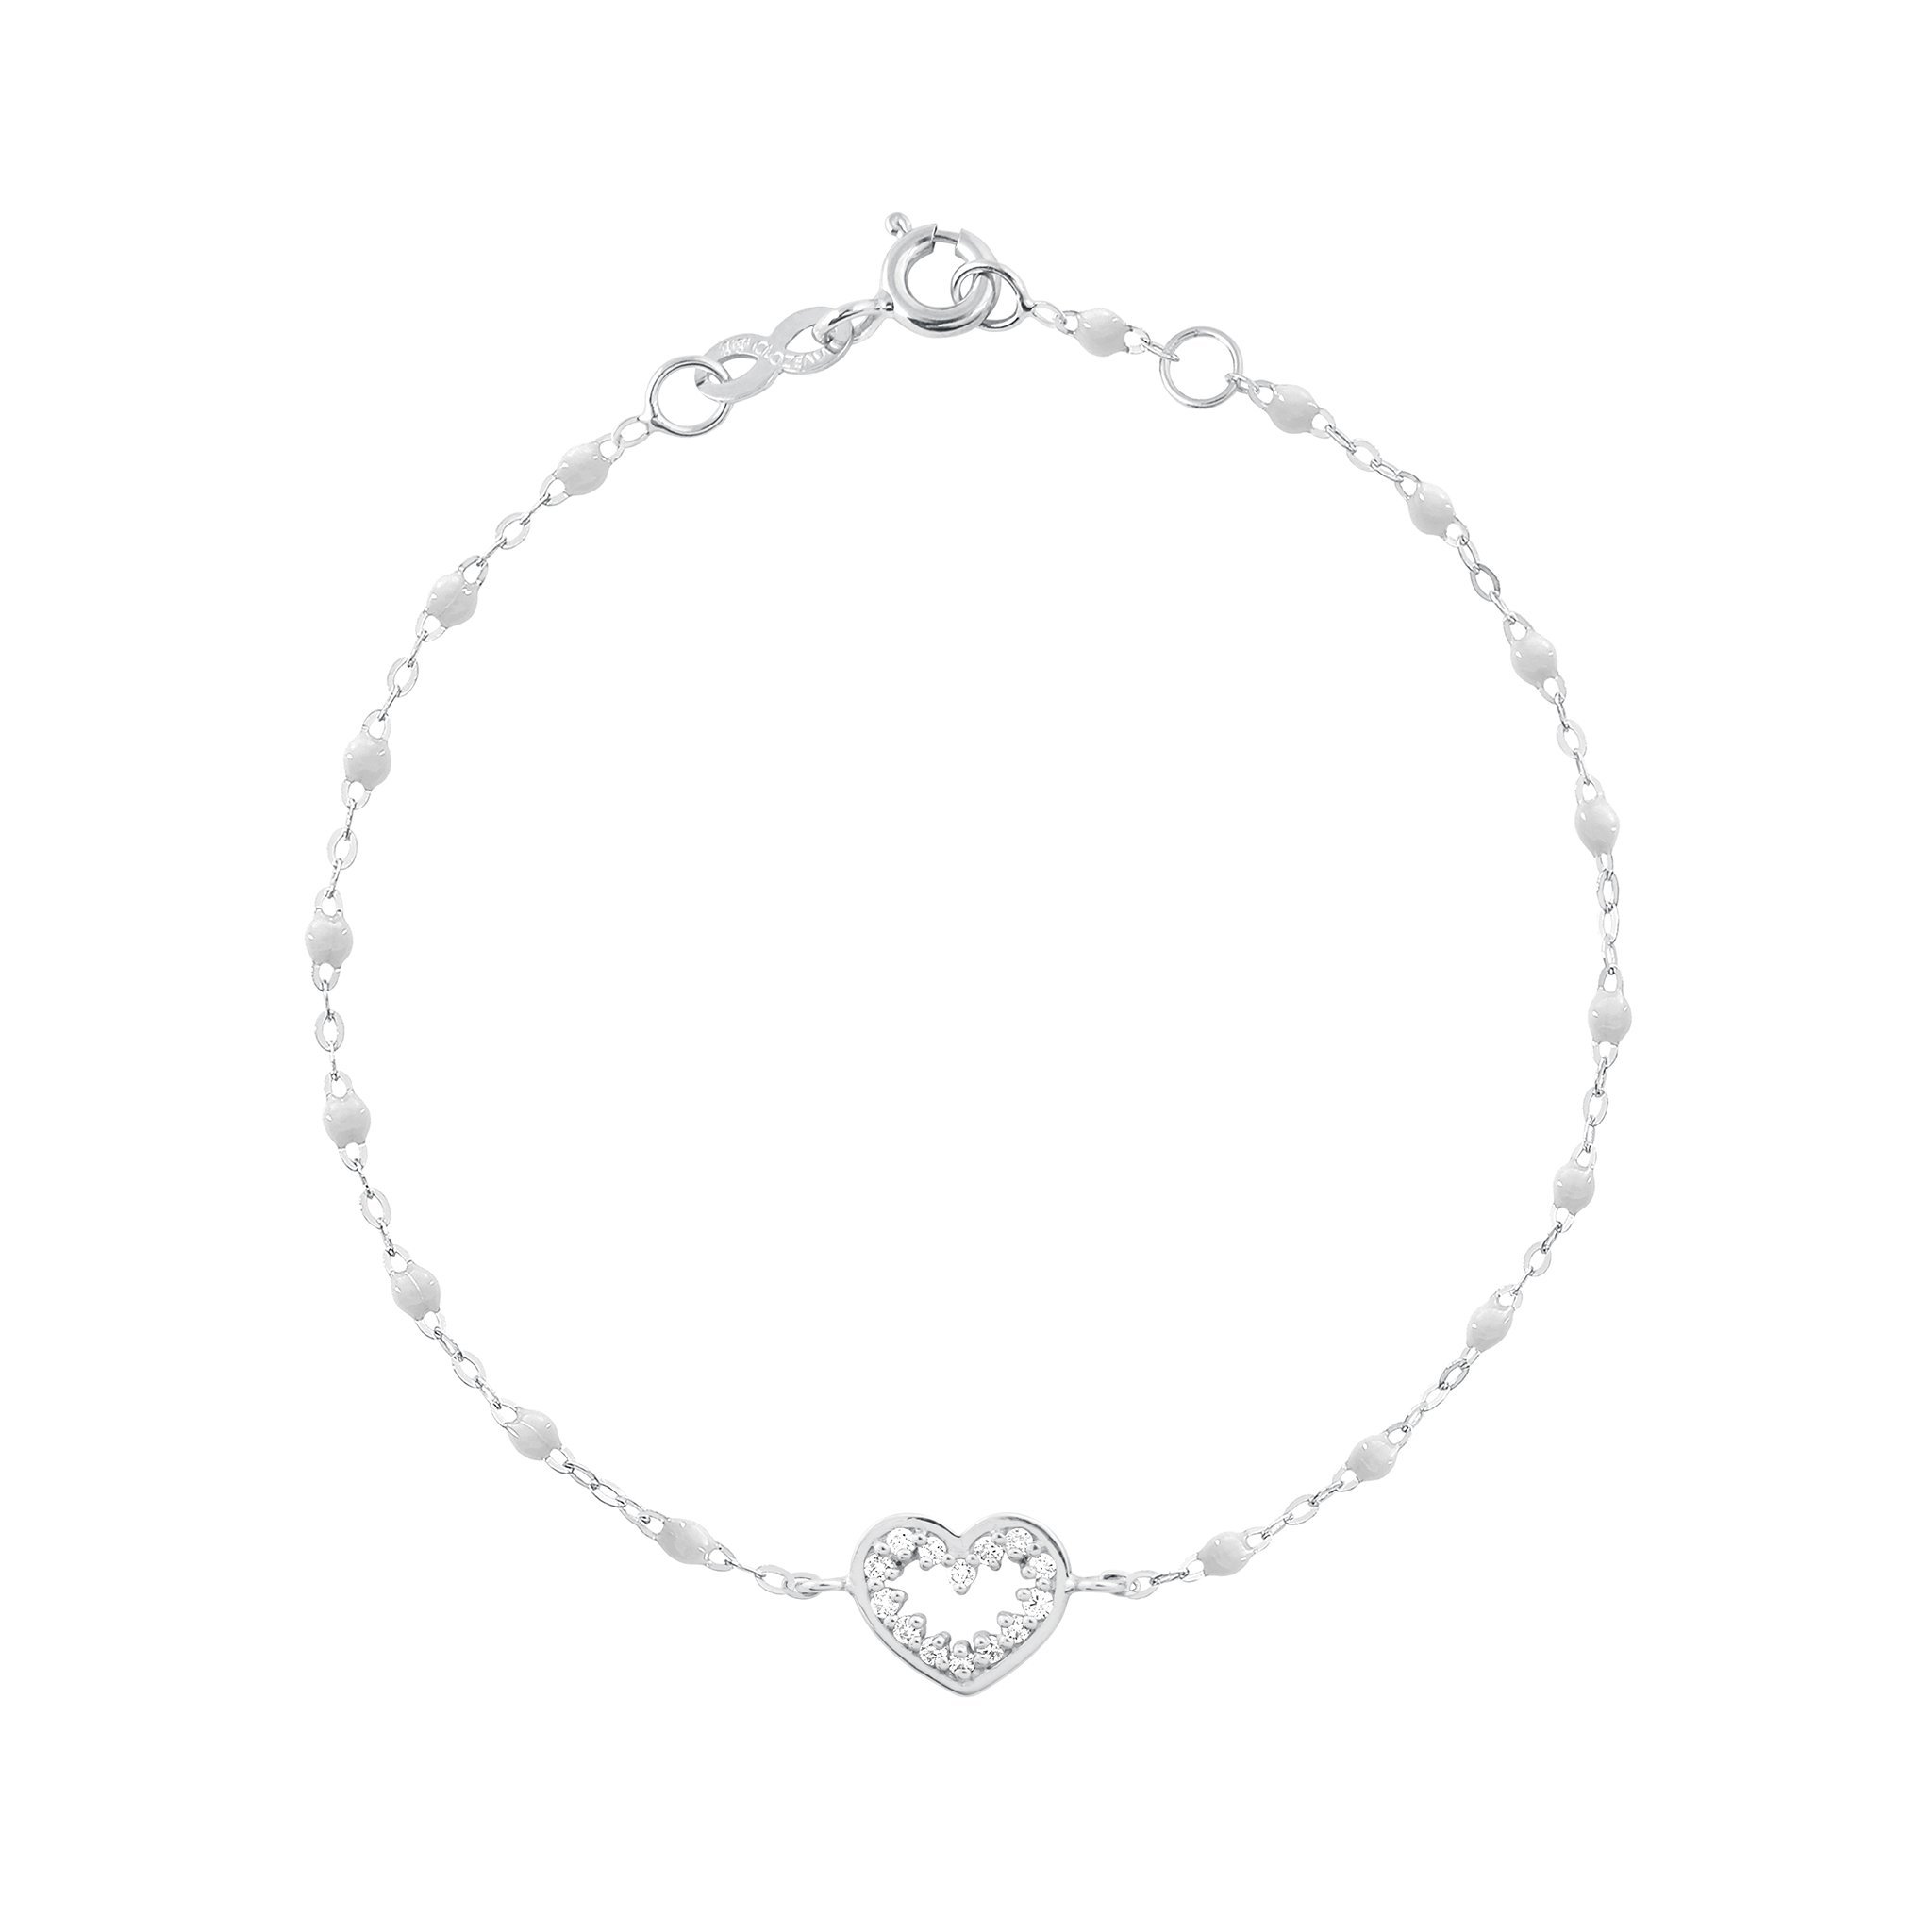 Bracelet blanc Cœur Suprême, diamants, or blanc, 17 cm  Référence :  b3cs001g0117di -1